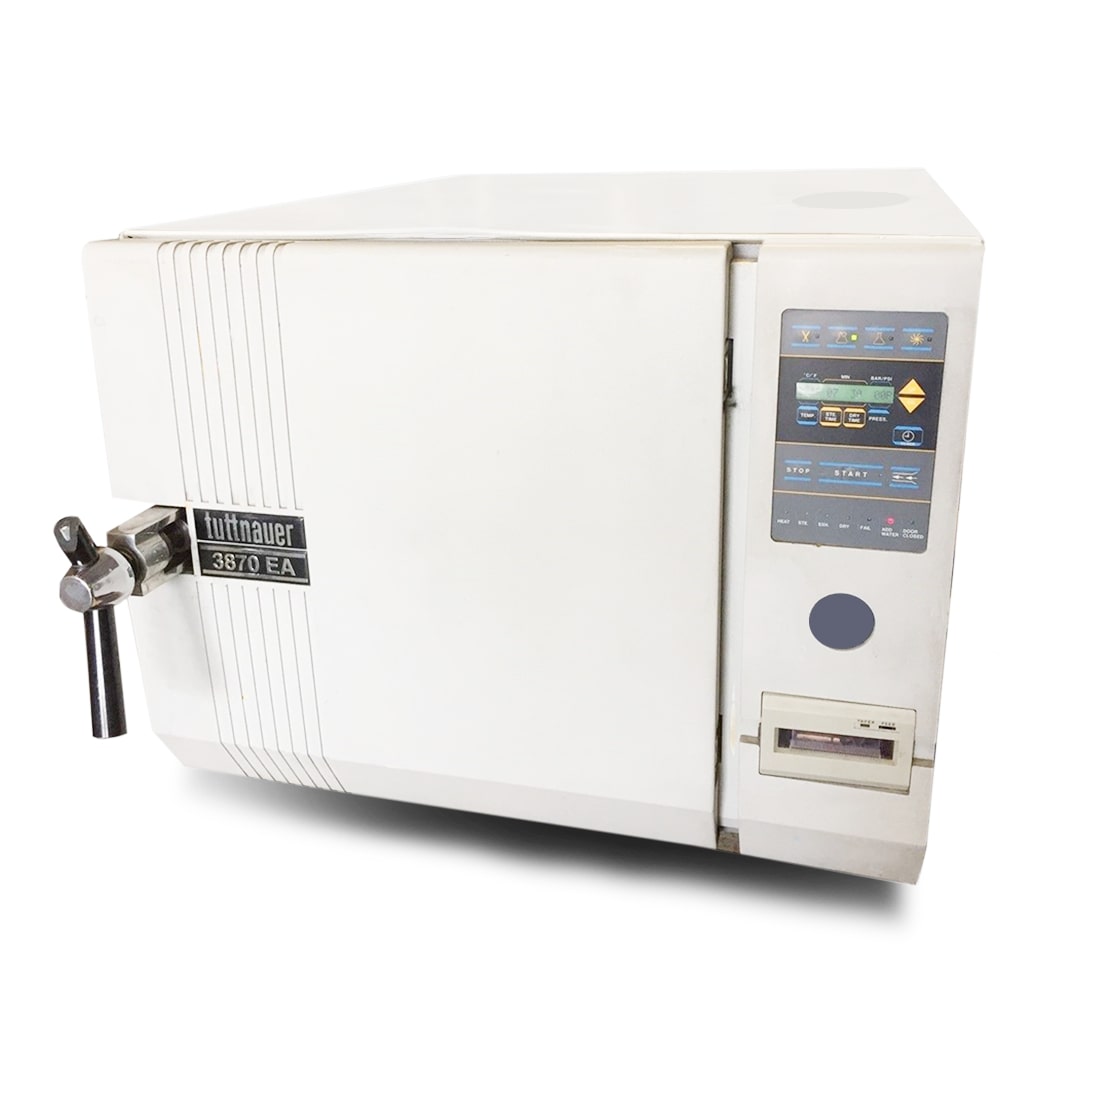 Tuttnauer 3870EA - Autoclave Automatic Sterilizier